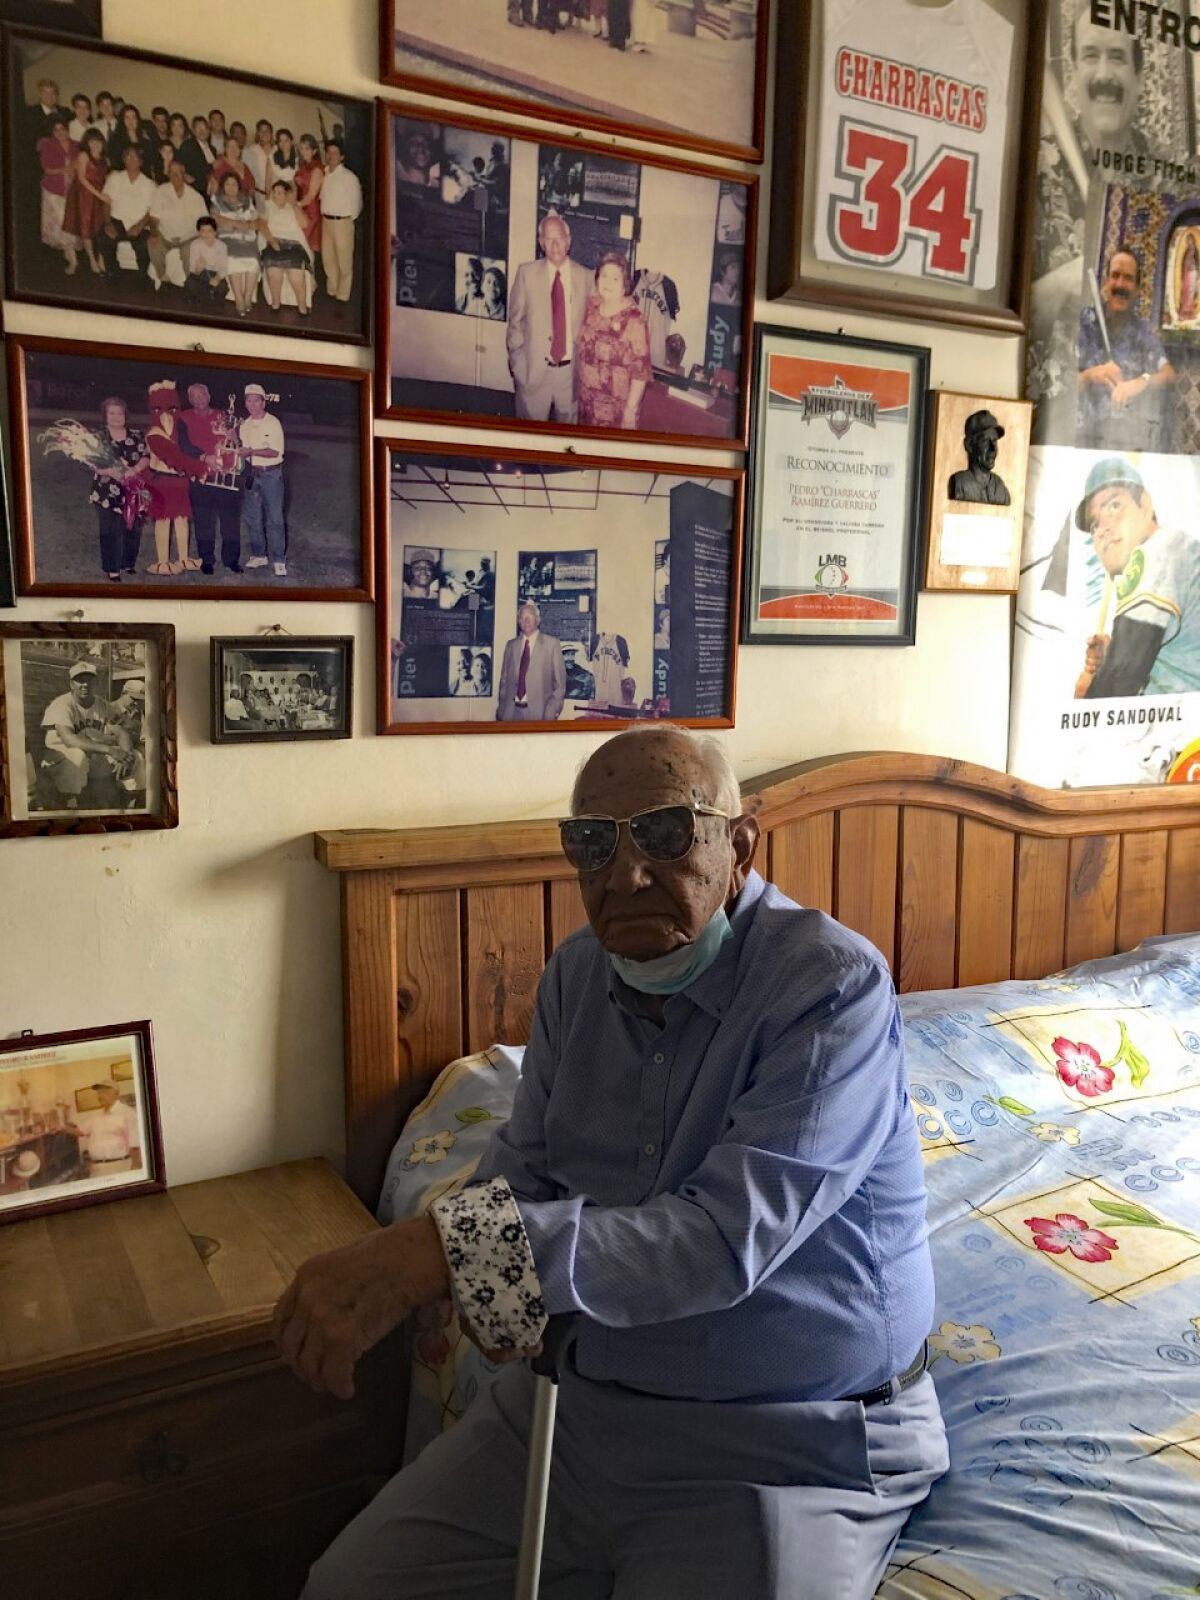 Pedro “Charrascas” Ramírez sits in his home next to photos of his family and baseball memorabilia. 2022.